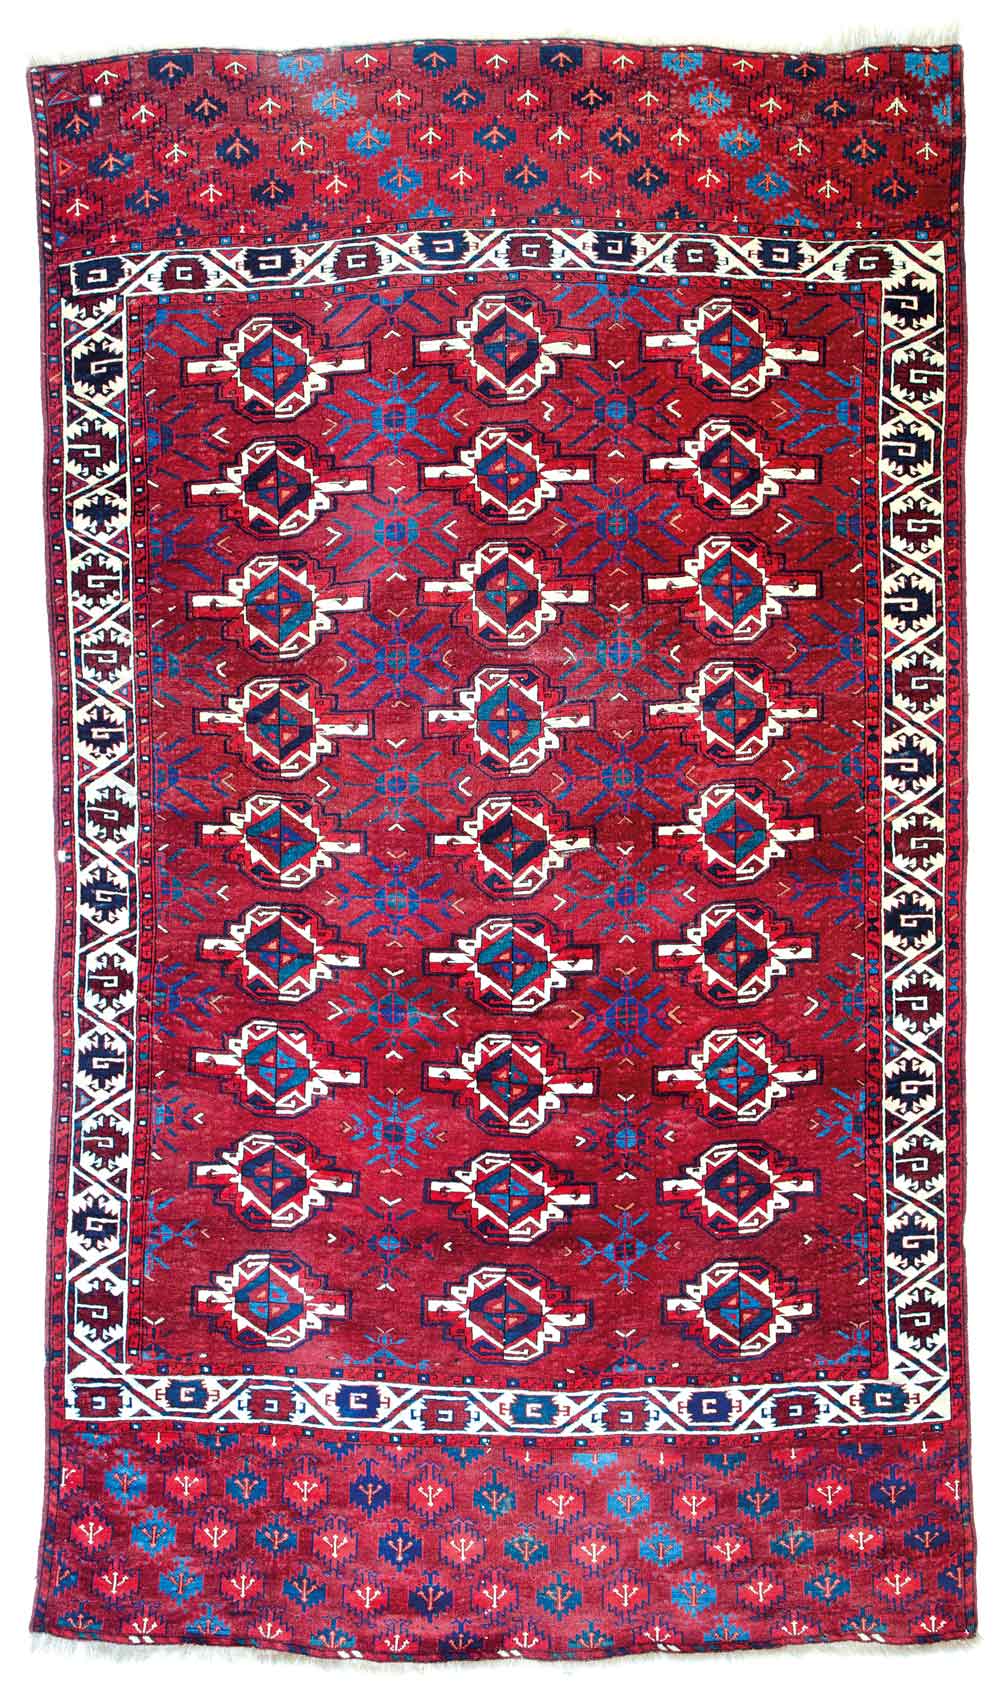 Lot 124, Yomut main carpet, Turkmenistan circa 1800, 9ft. 2in. x 5ft. 3in. Estimate: € 50,000 – 70,000